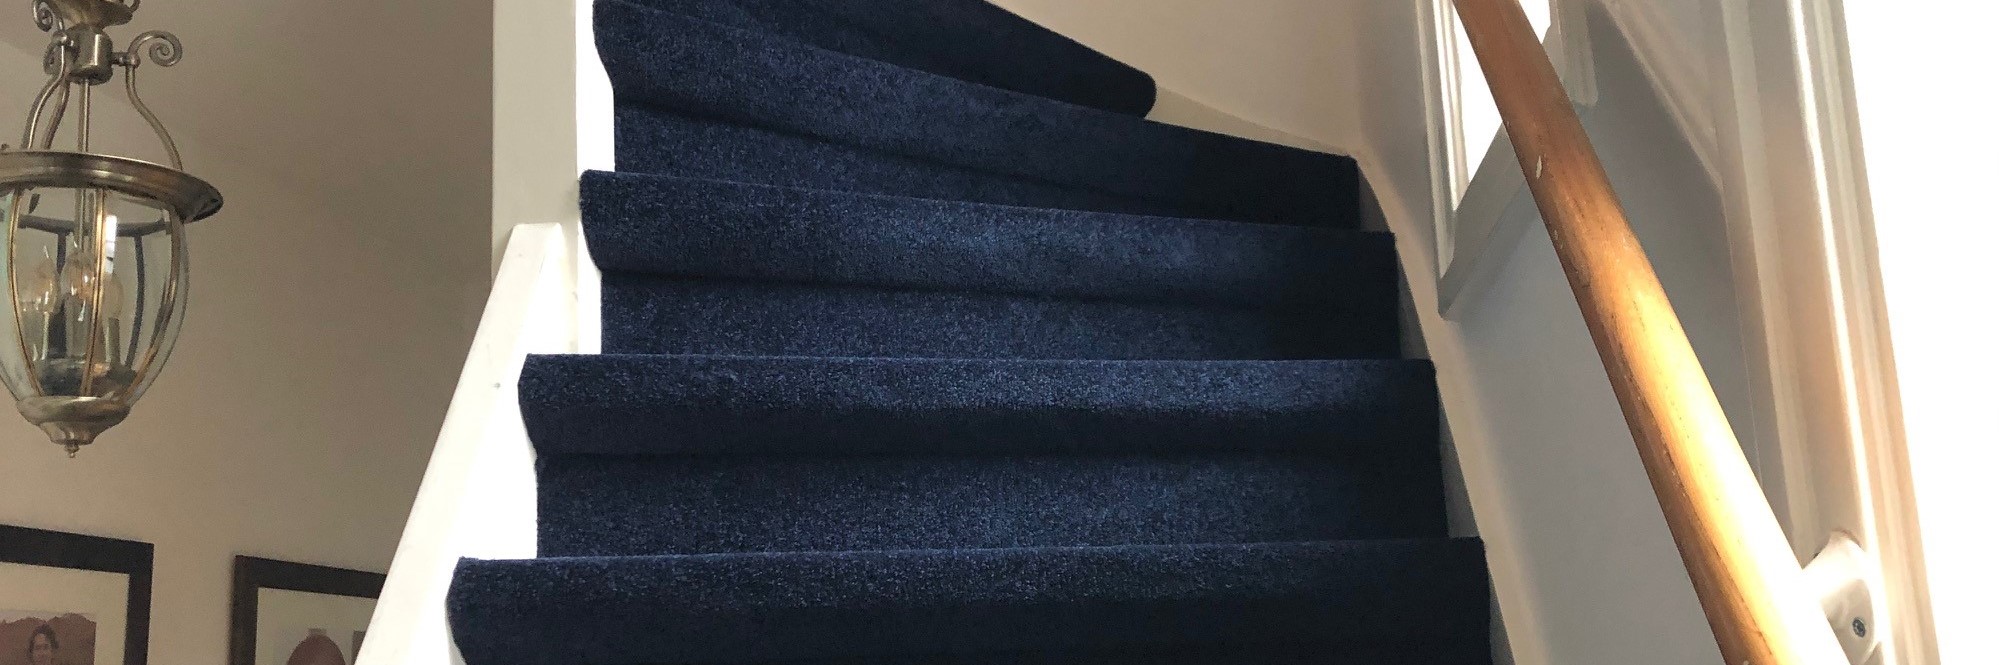 Vakkundig trappen bekleden - goedkoop trap stofferen - ART Woninginrichting